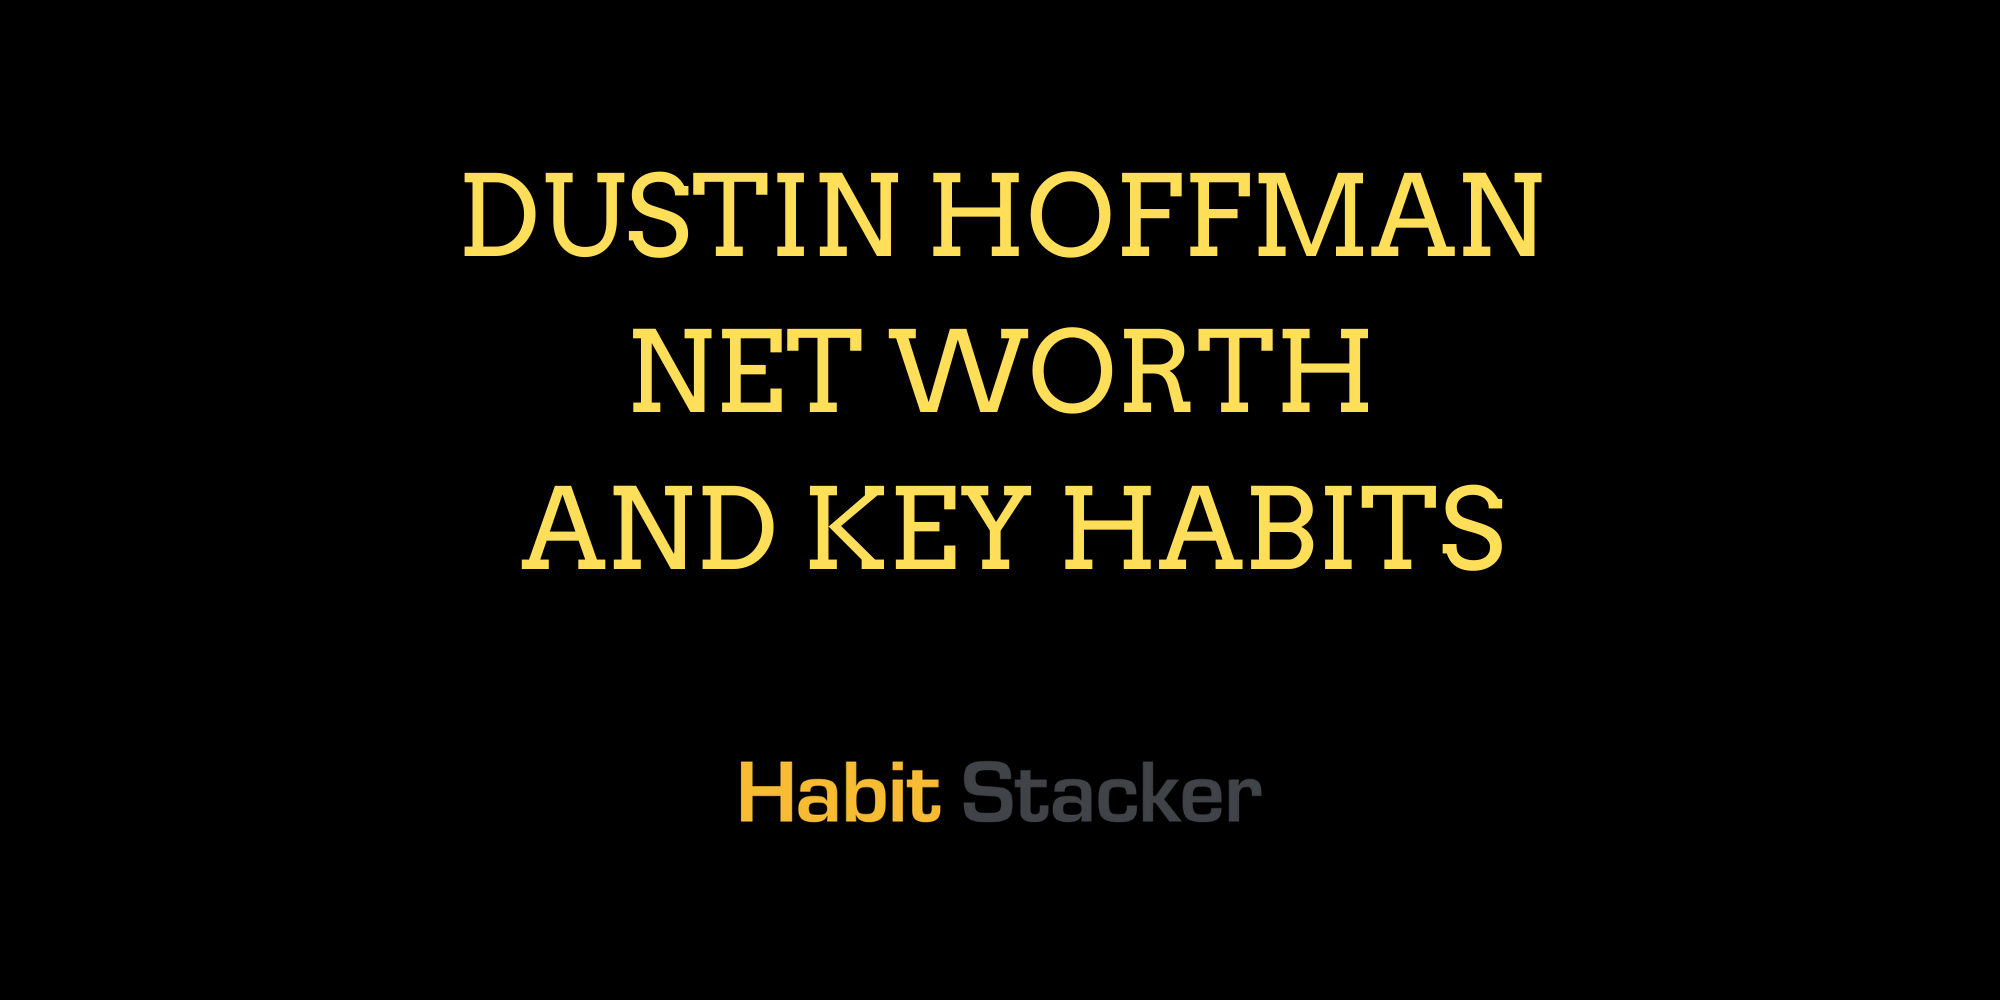 Dustin Hoffman Net Worth and Key Habits